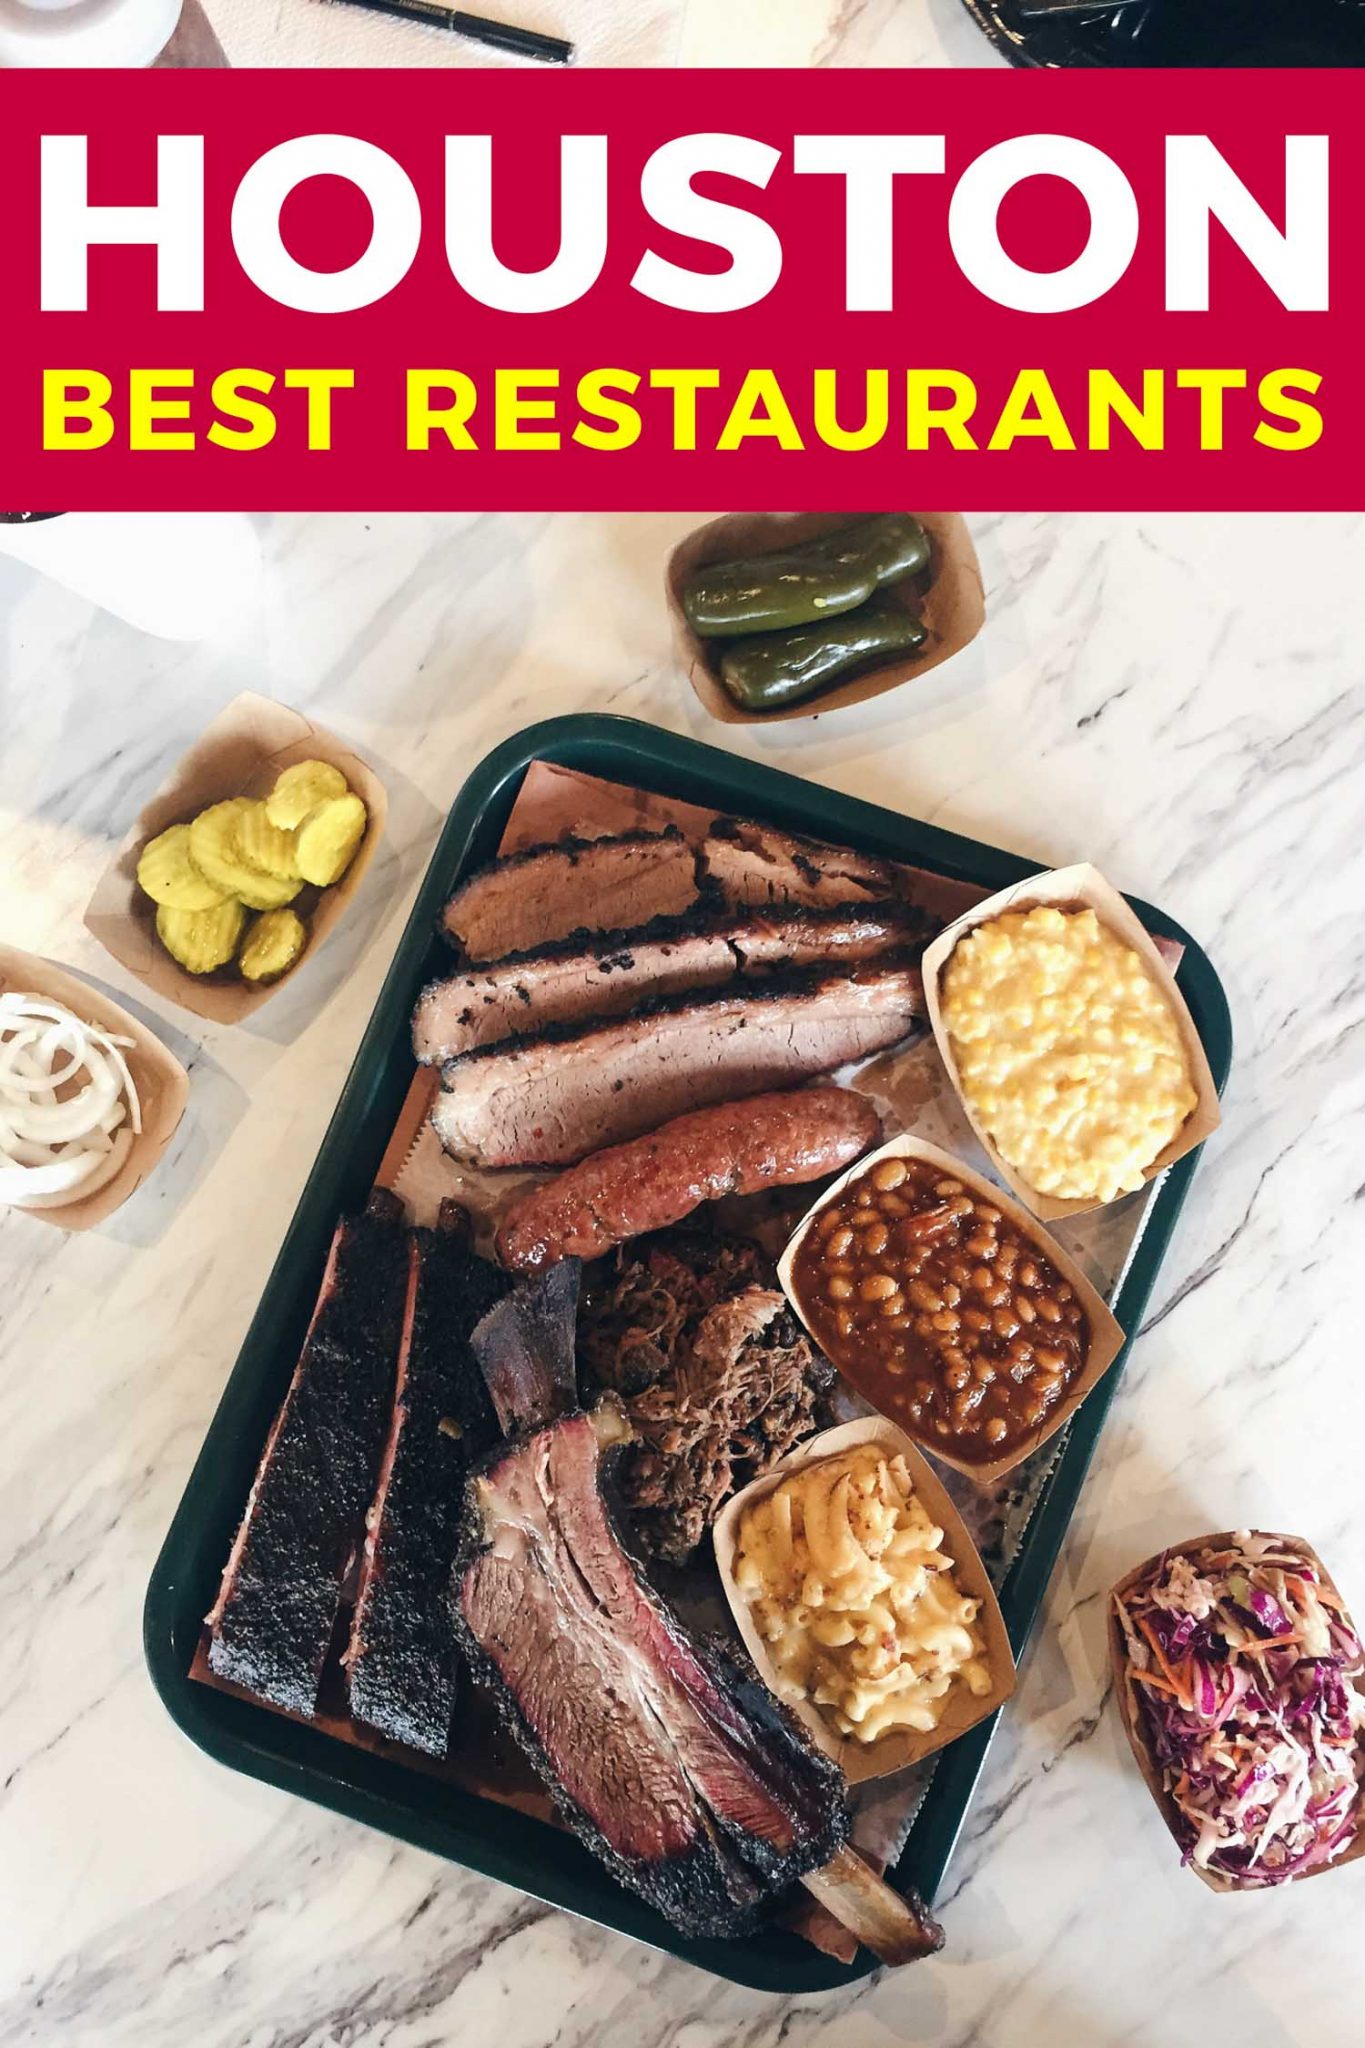 The 24 Hour Layover Best Restaurants in Houston